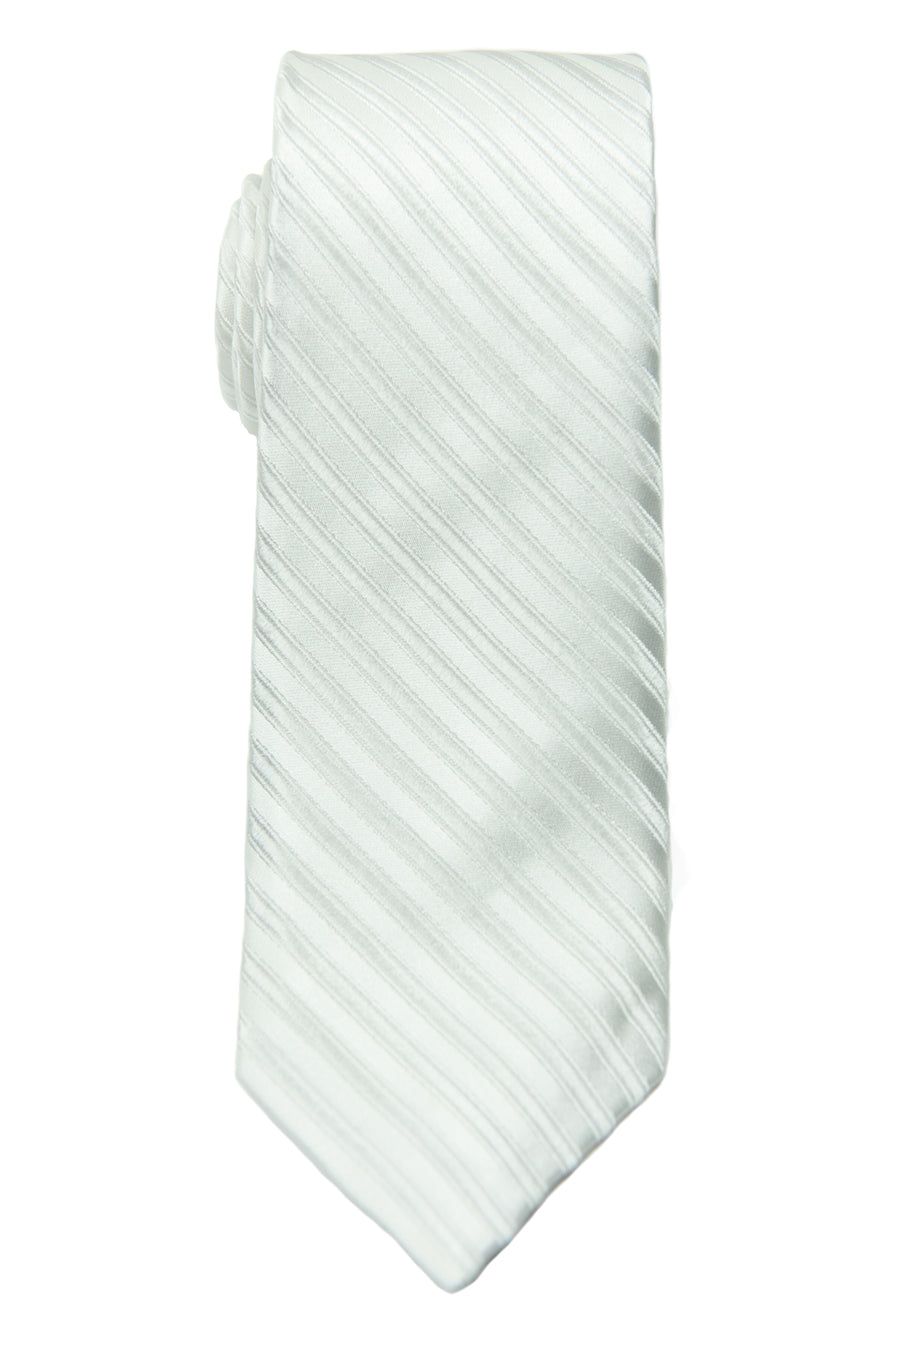 Heritage House 28801 100% Silk Tie-Tonal Stripe- White